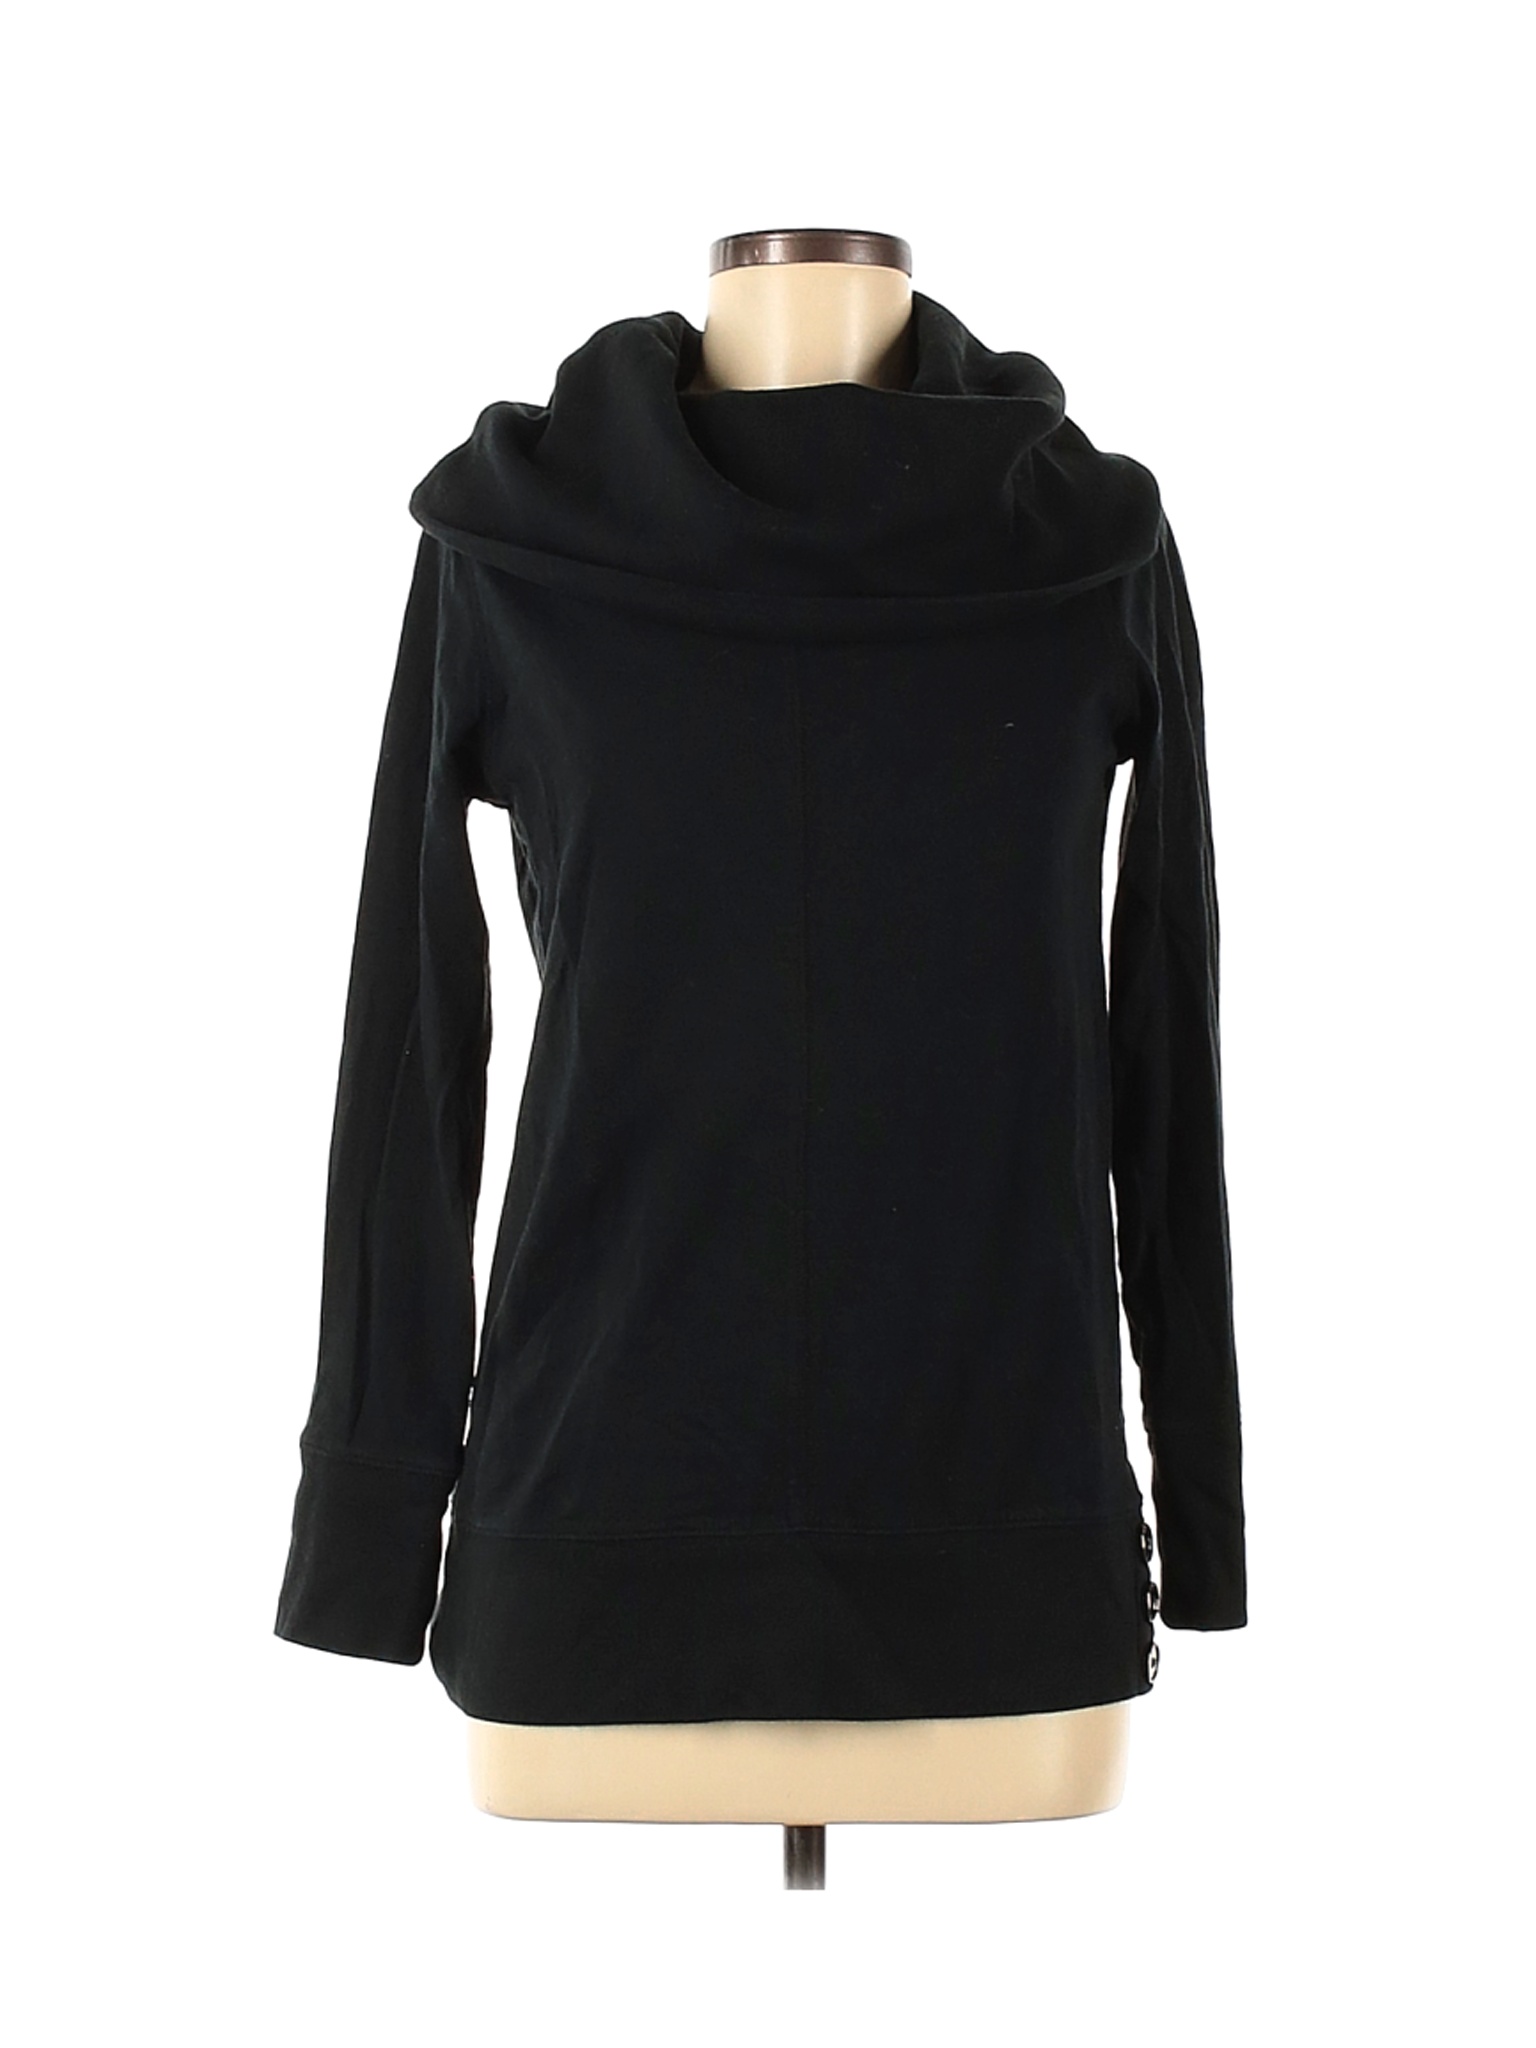 Ann Taylor LOFT Women Black Sweatshirt M | eBay